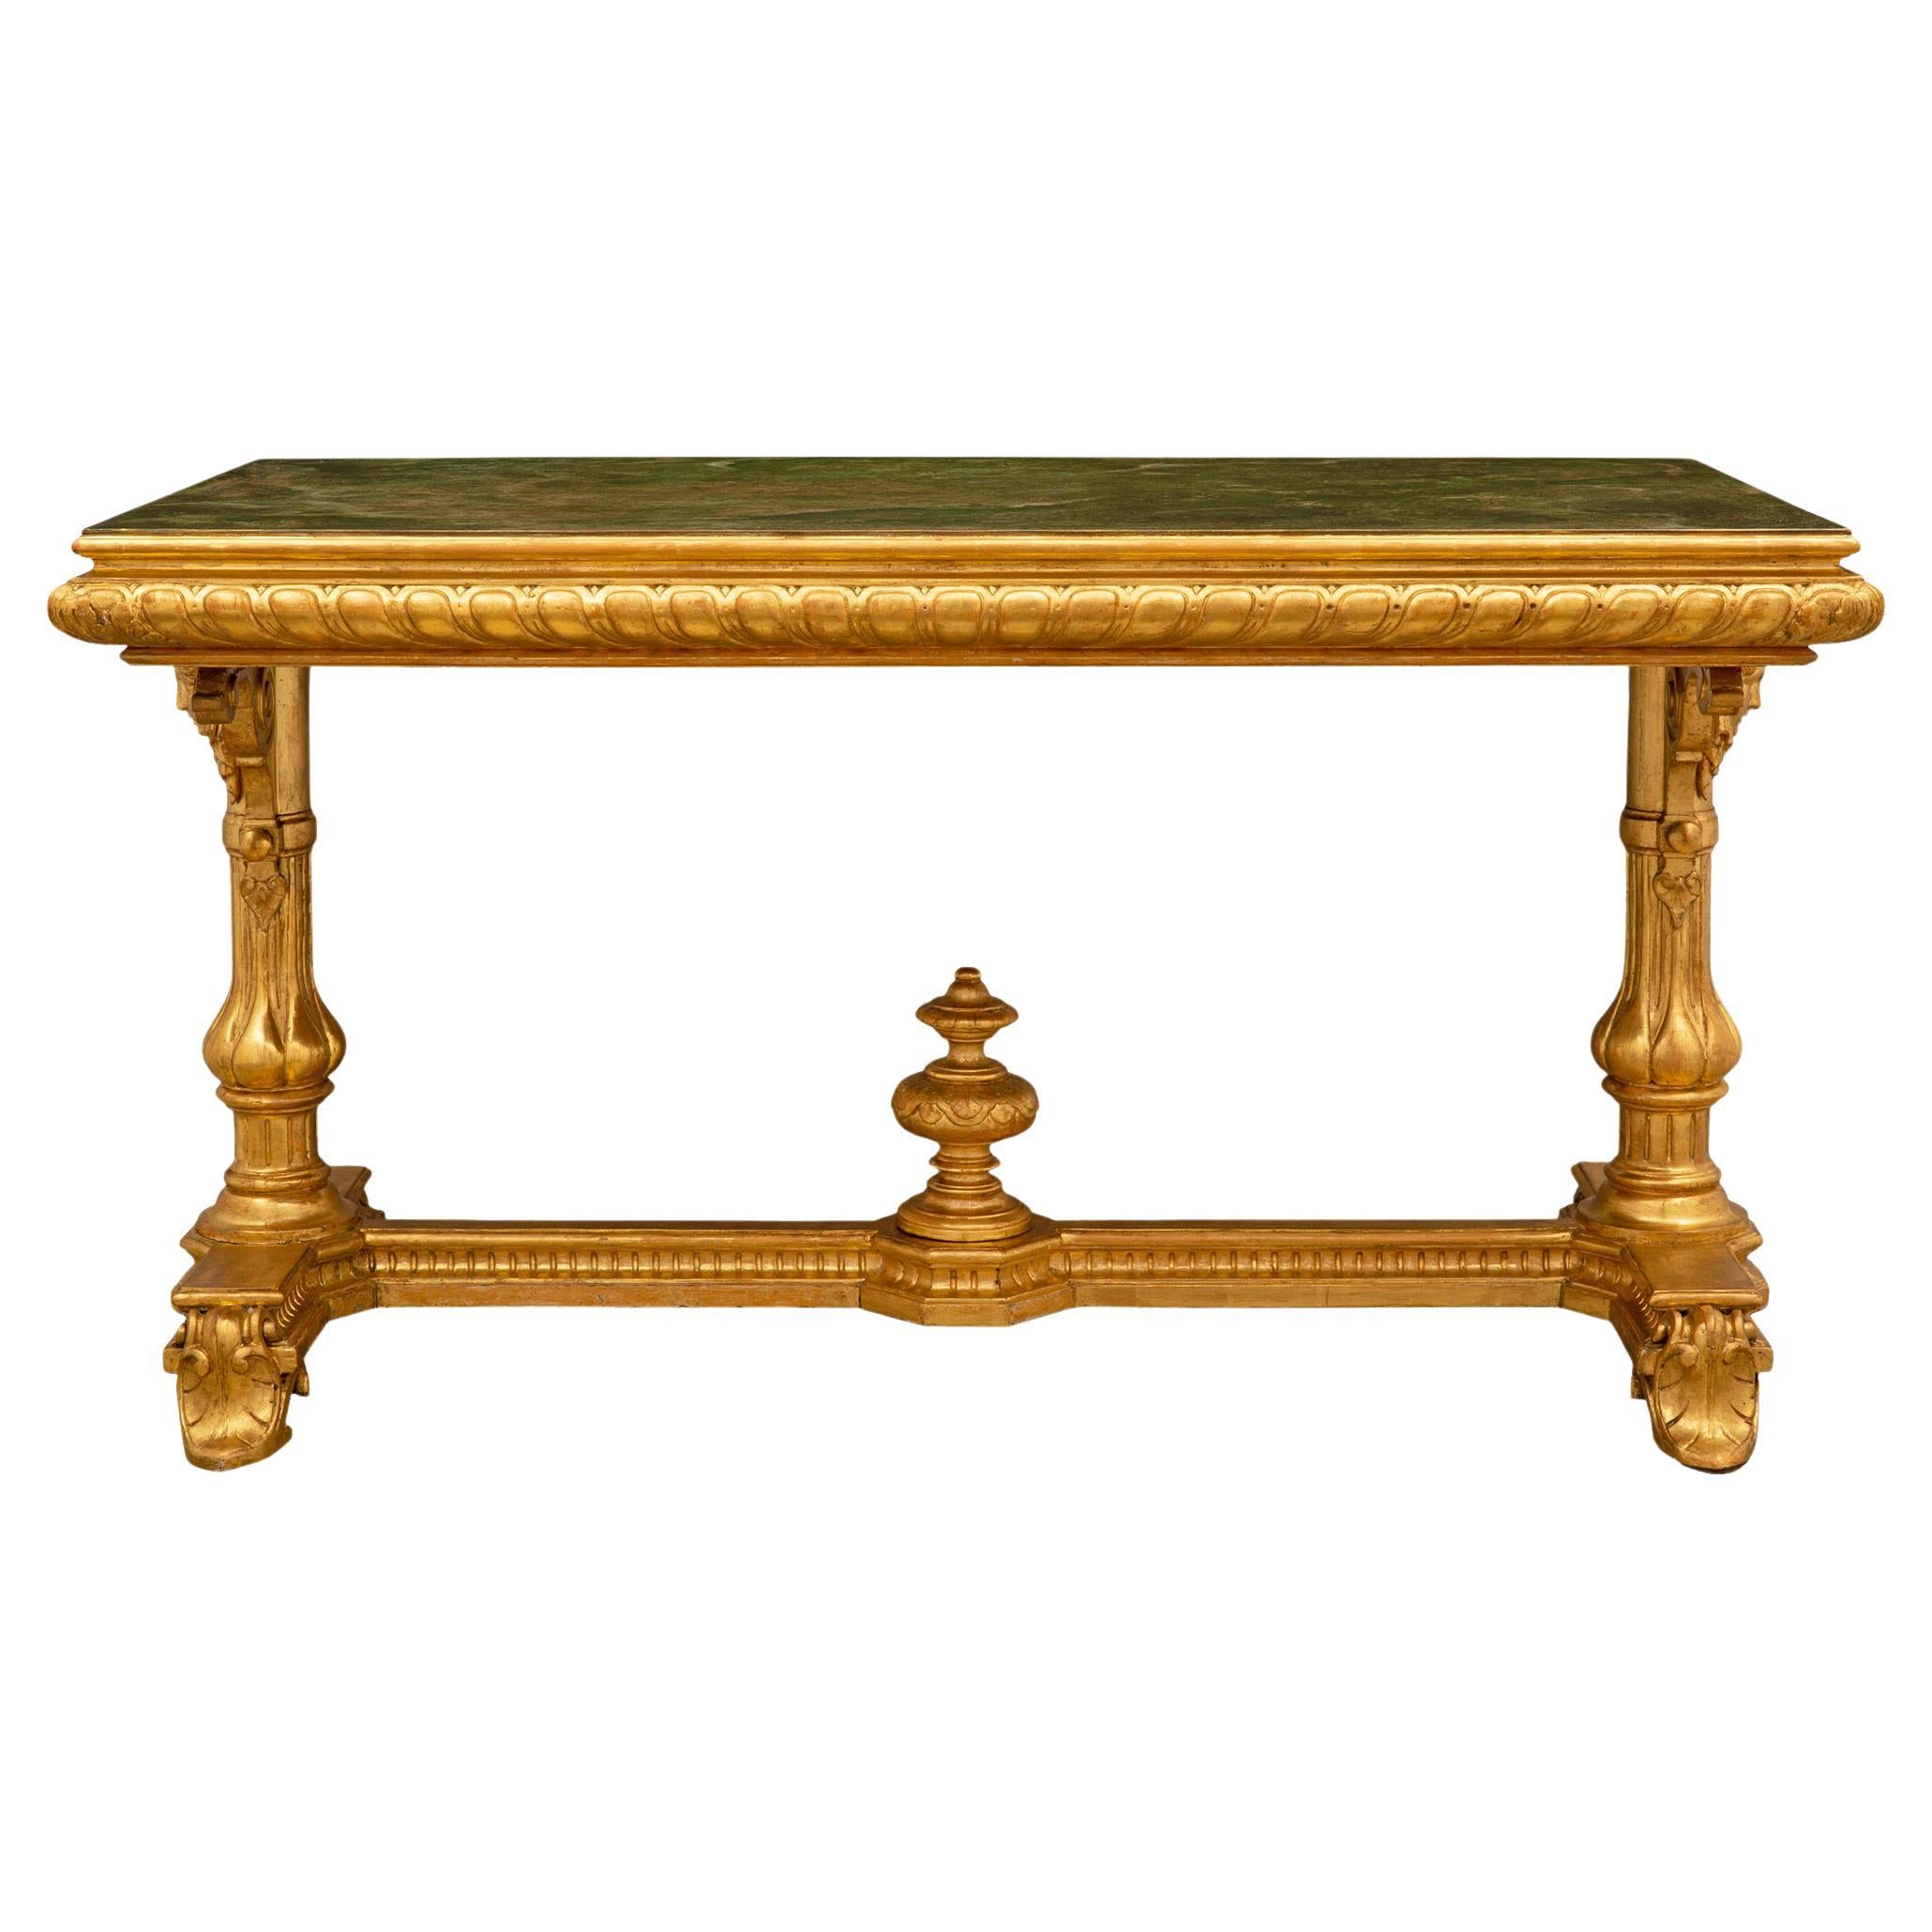 Italian 19th Century Renaissance Style Giltwood Center Table